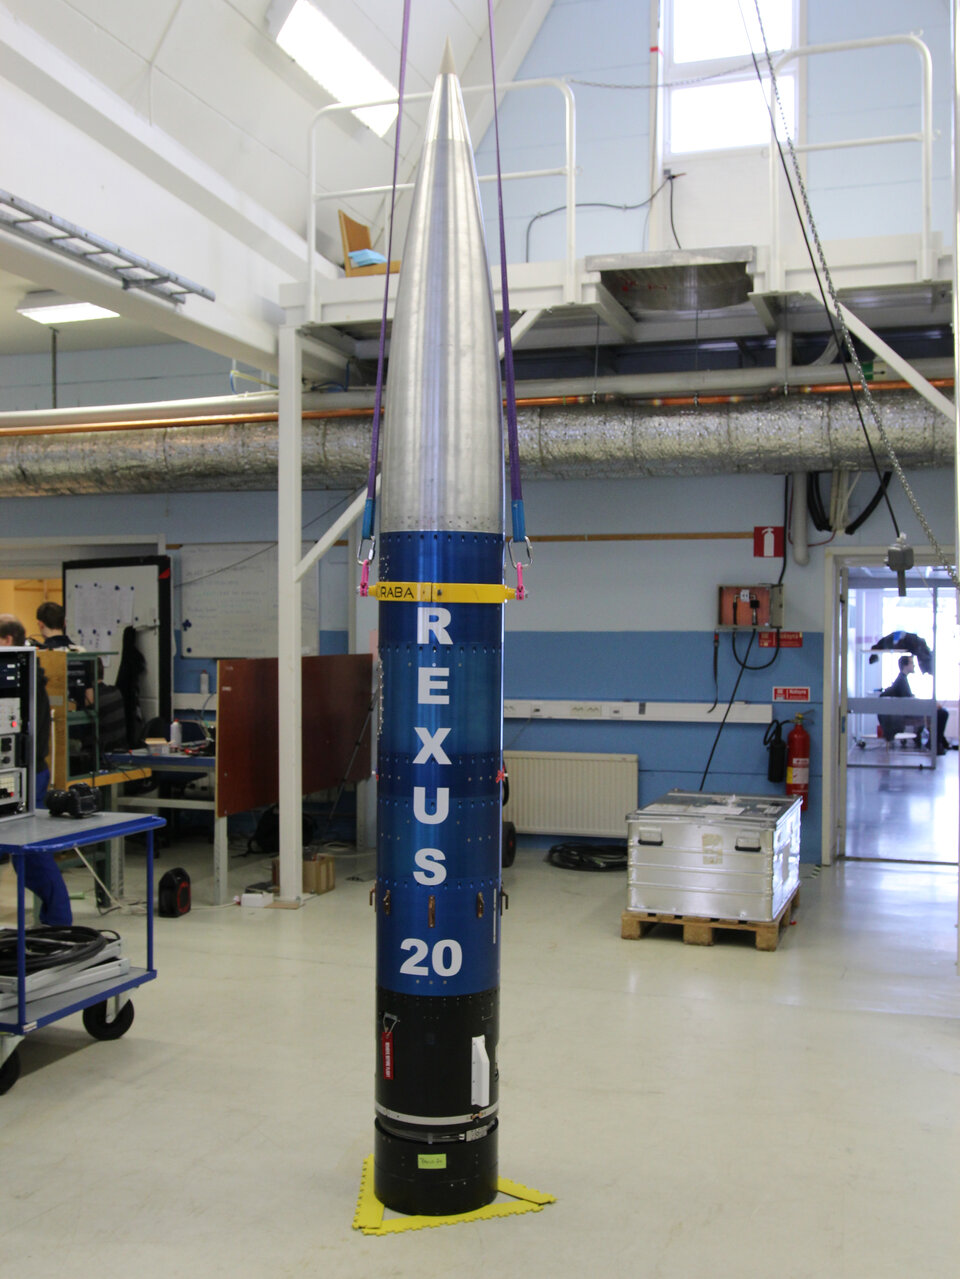 REXUS 20 rocket ready for launch